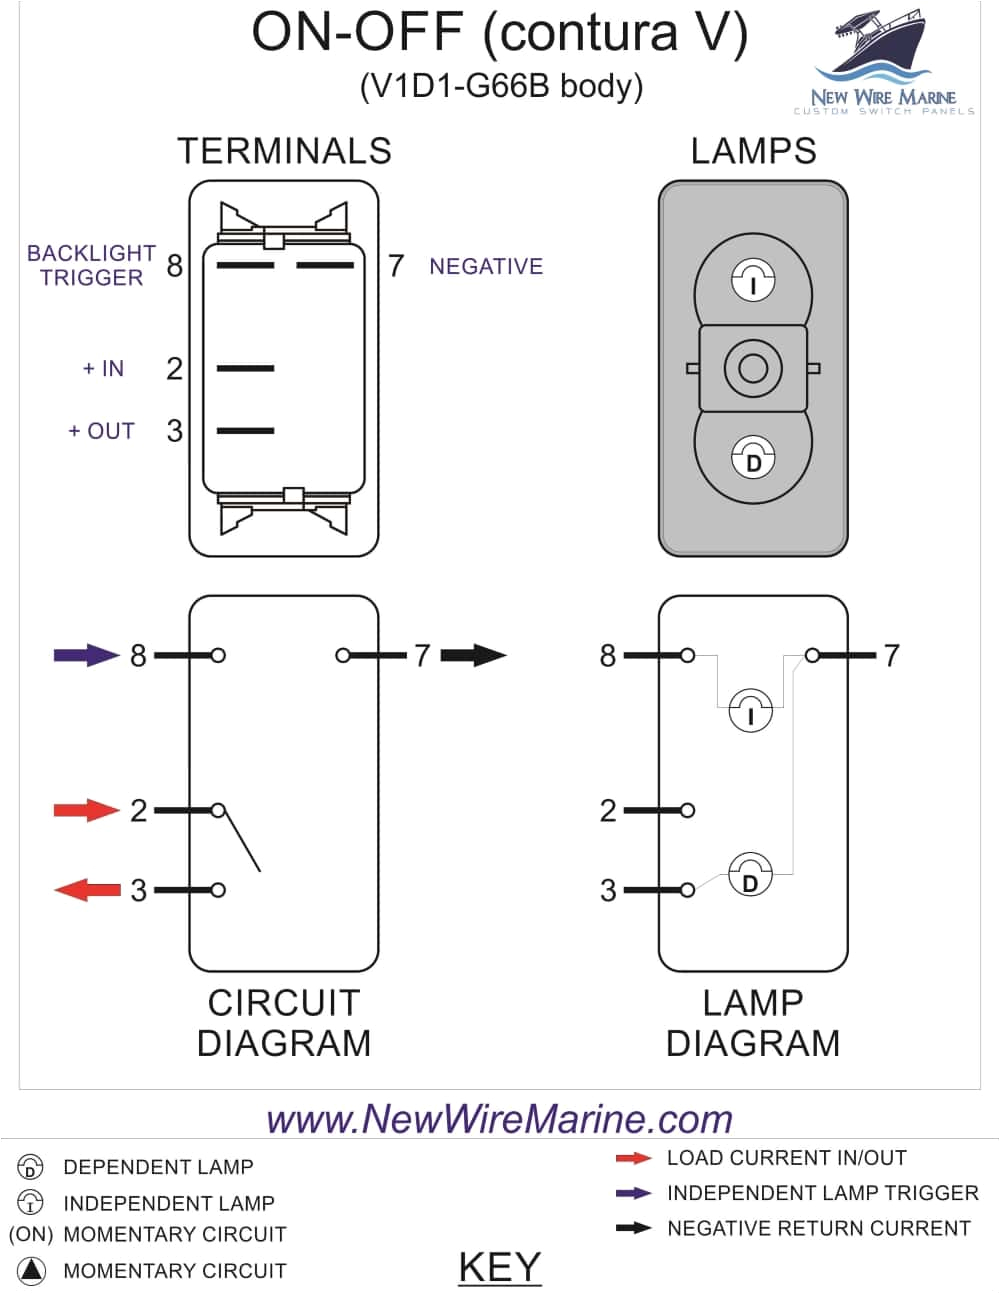 rocker switch wiring diagrams new wire marine spdt rocker switch wiring diagram on off rocker switch